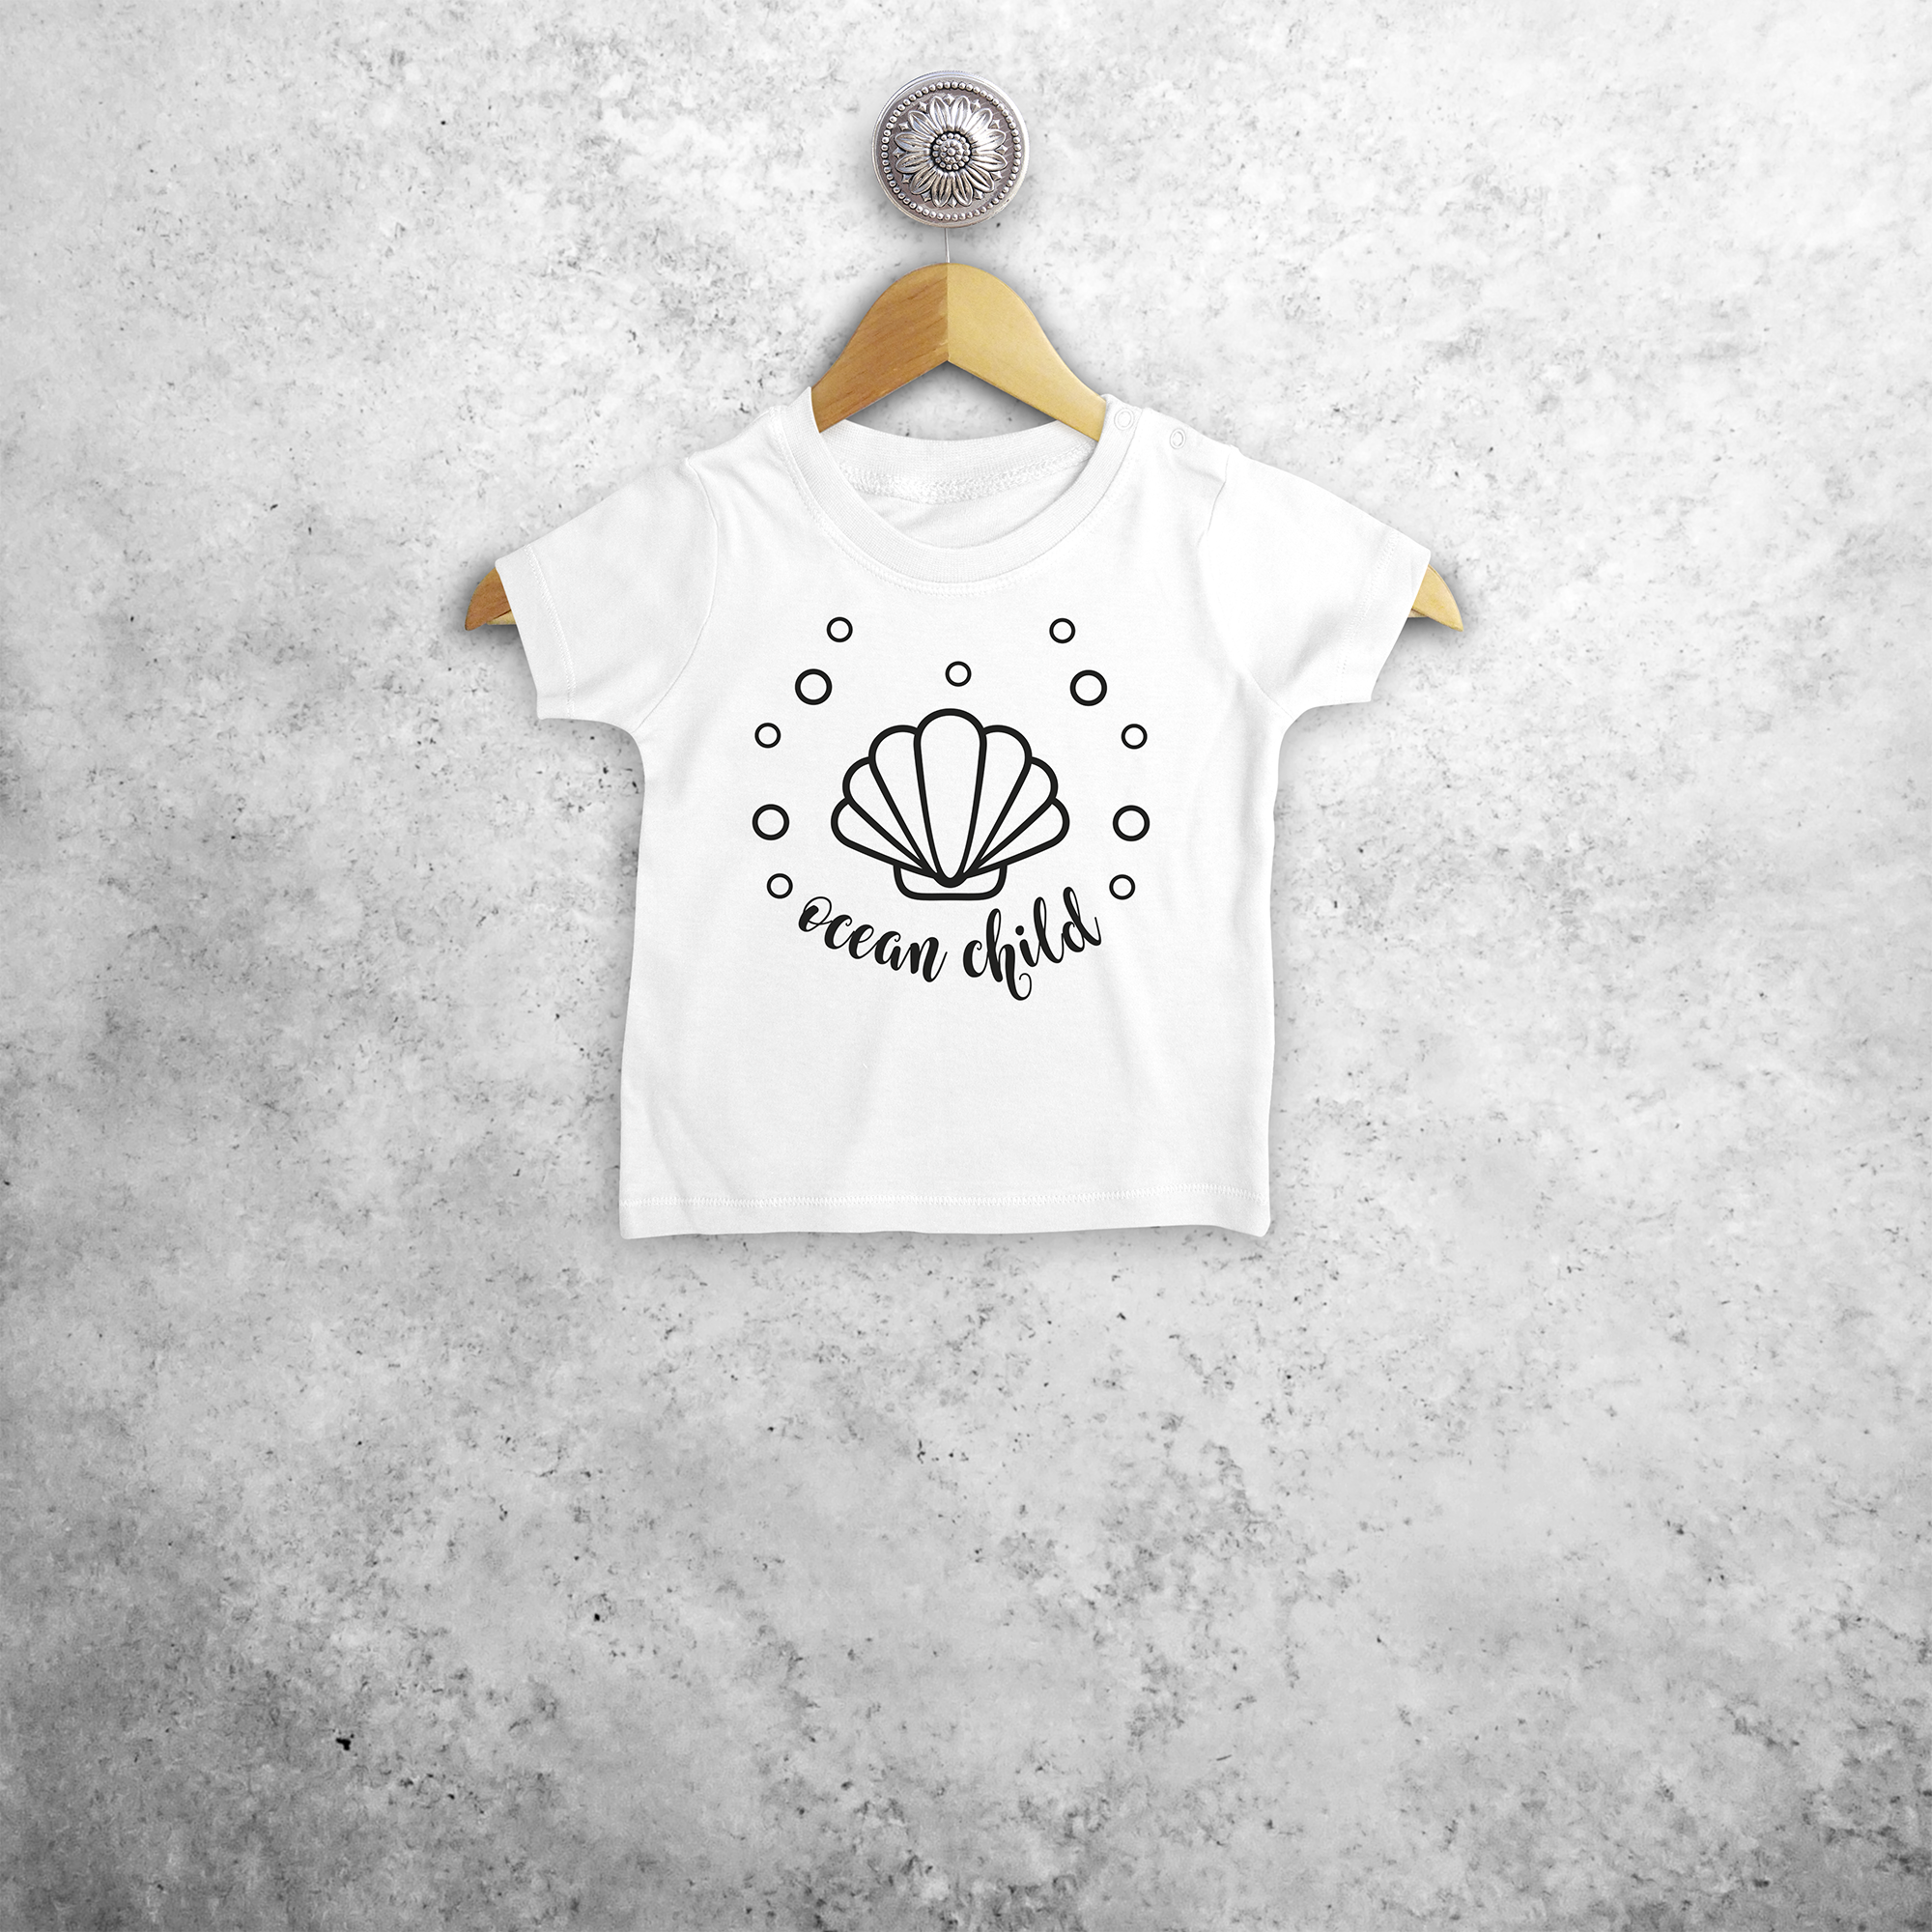 'Ocean child' baby shortsleeve shirt